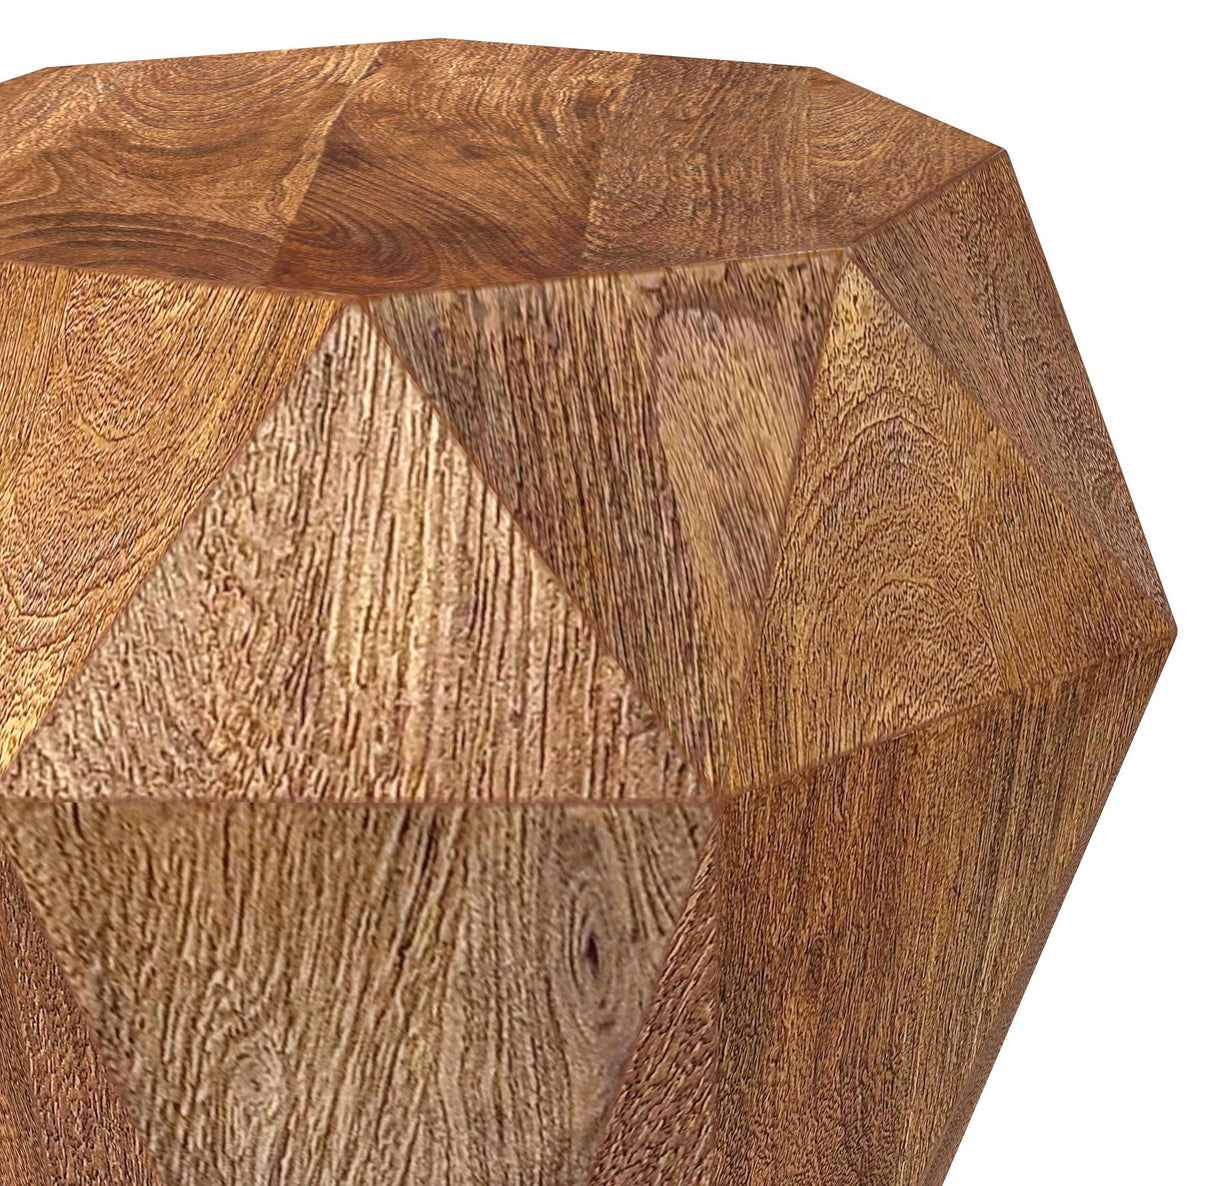 Jacinto Geometric Solid Mango Wood Side Table Natural Brown - 931158